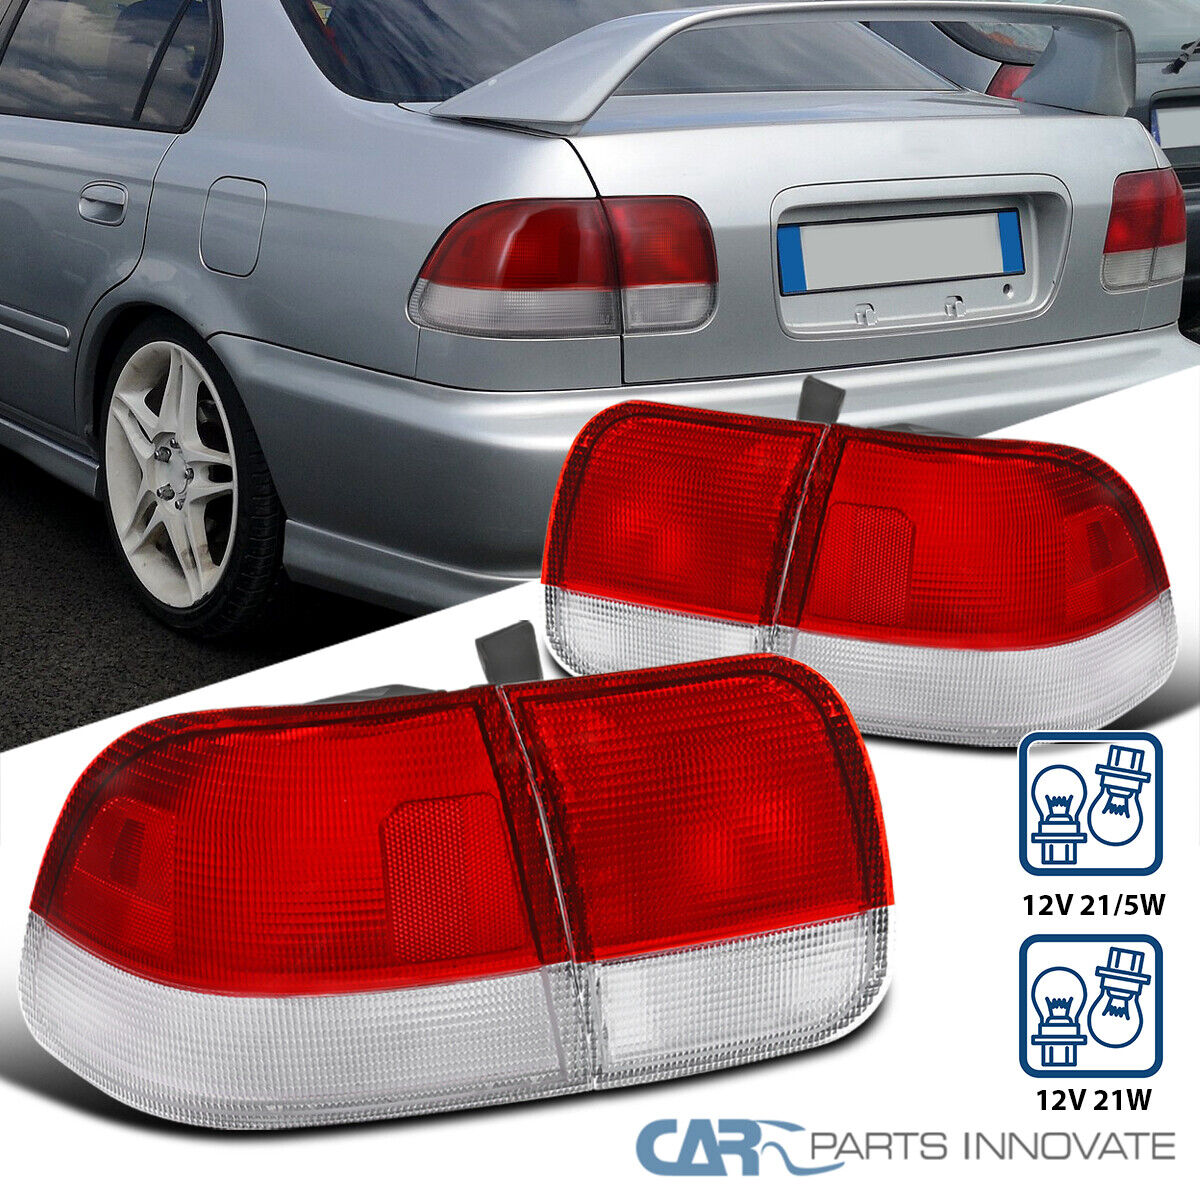 Fits 96-98 Honda Civic 4Dr Sedan Red/Clear Tail Lights Rear Brake Parking Lamps